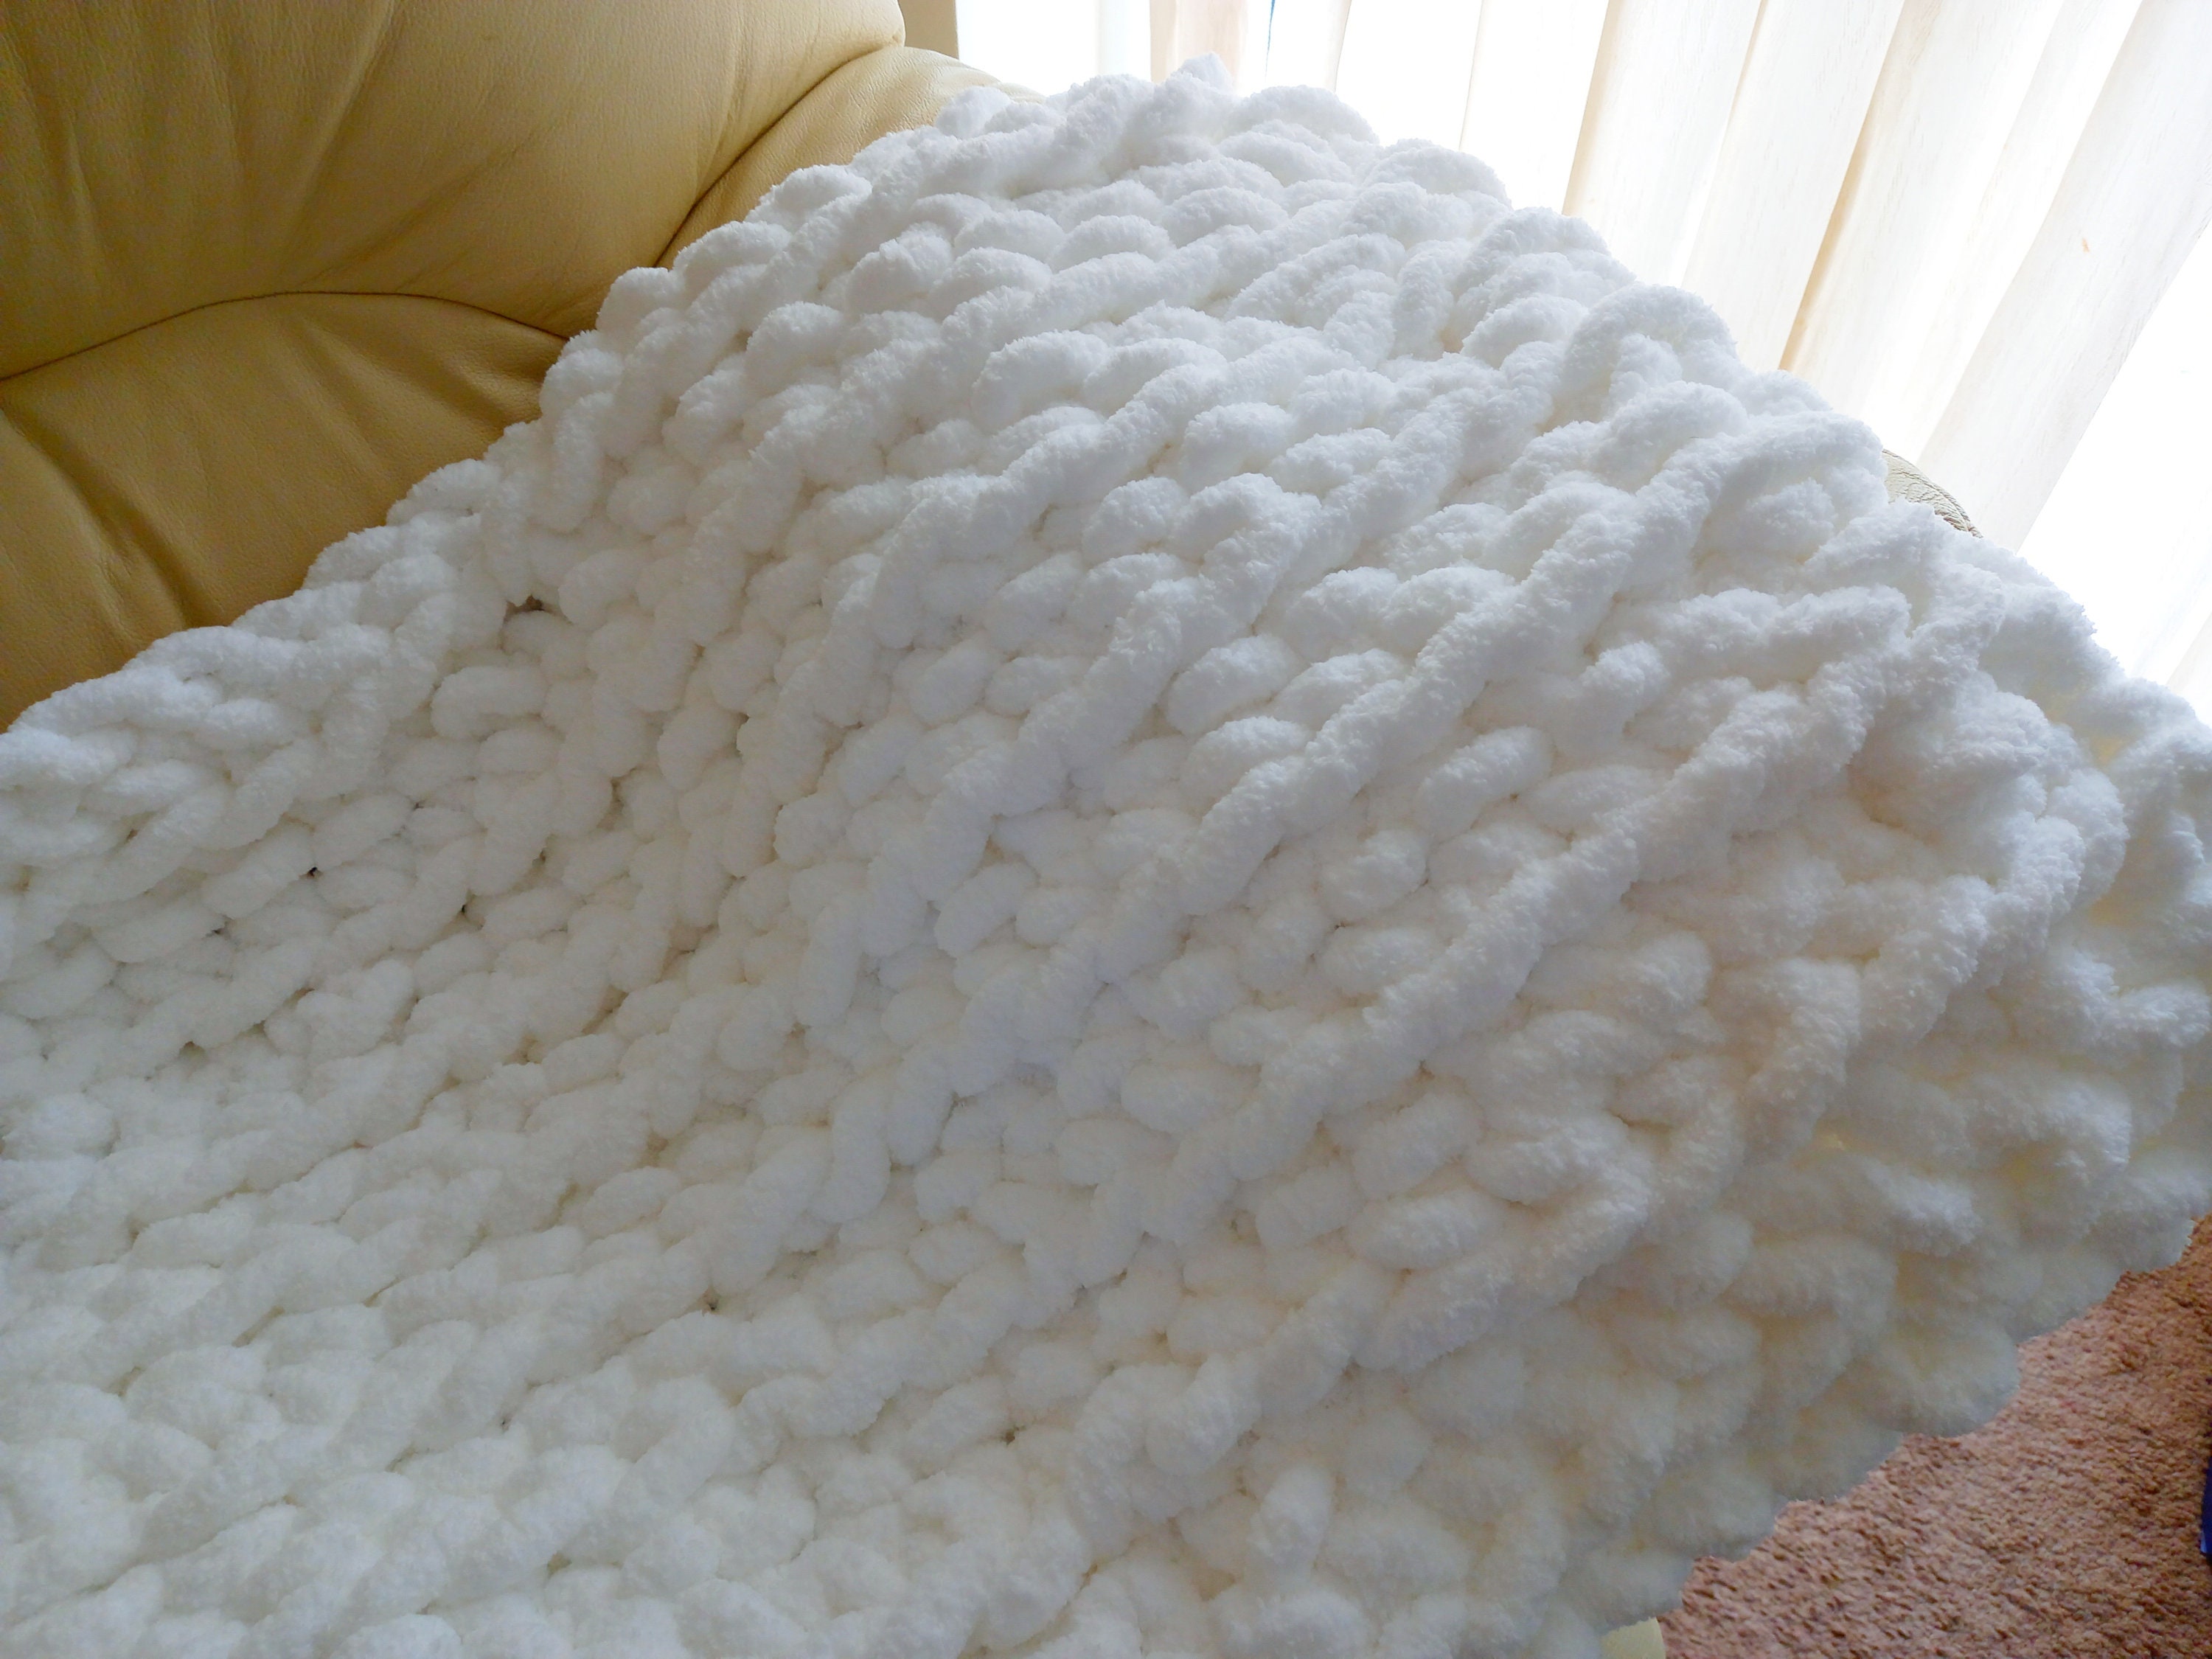 Hand Crochet a Blanket, Online class & kit, Gifts